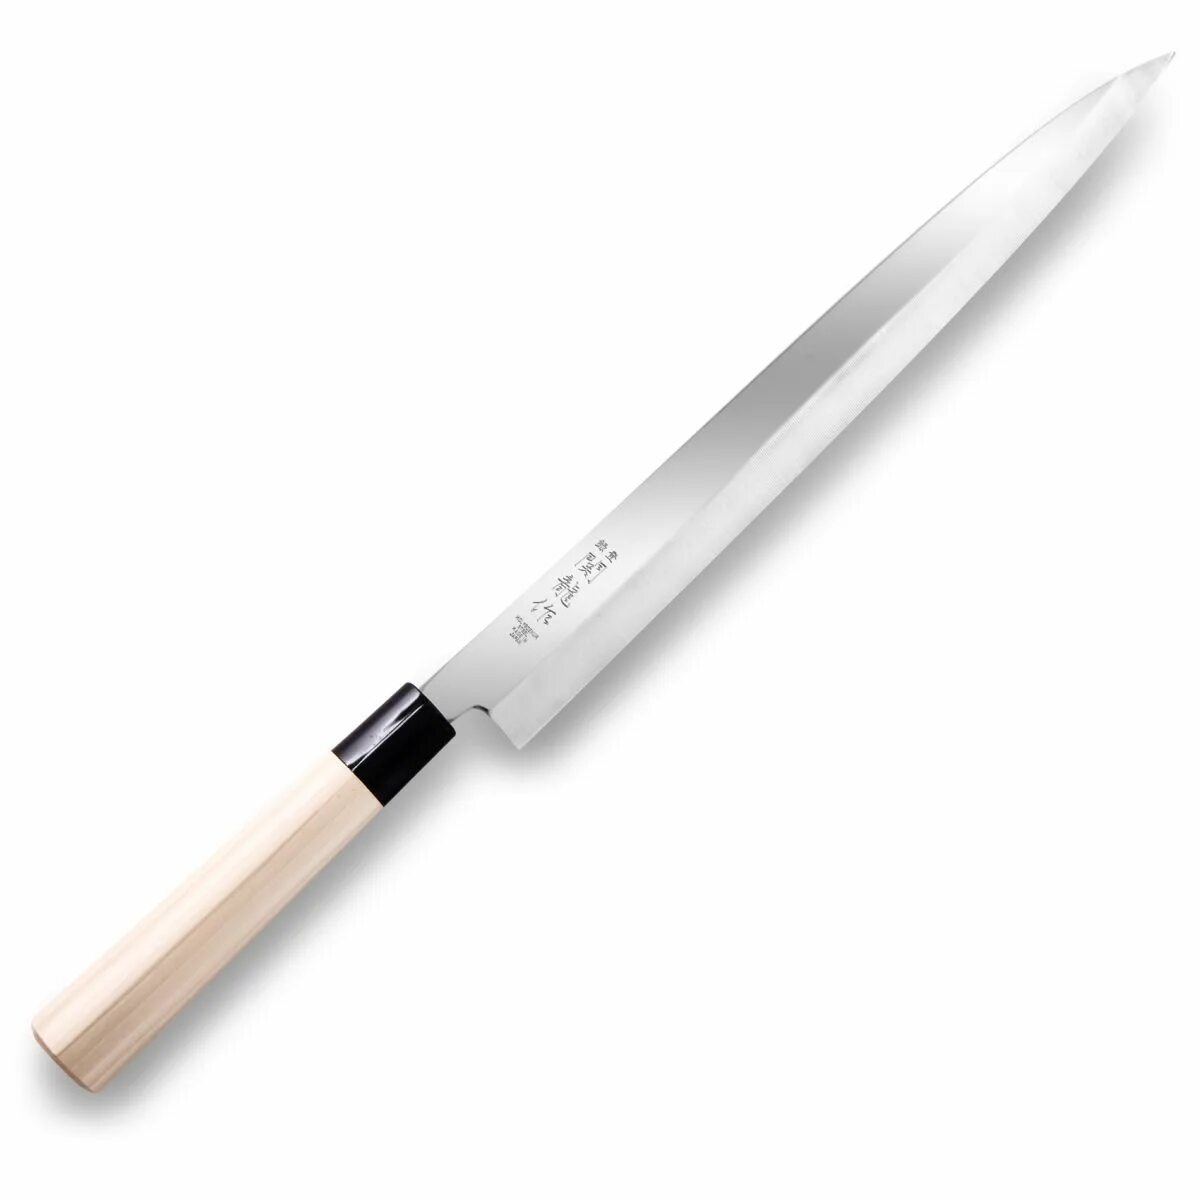 Японский нож Янагиба. Янагиба Samura. Японский нож Янаги Самура. Нож для суши Янагиба.